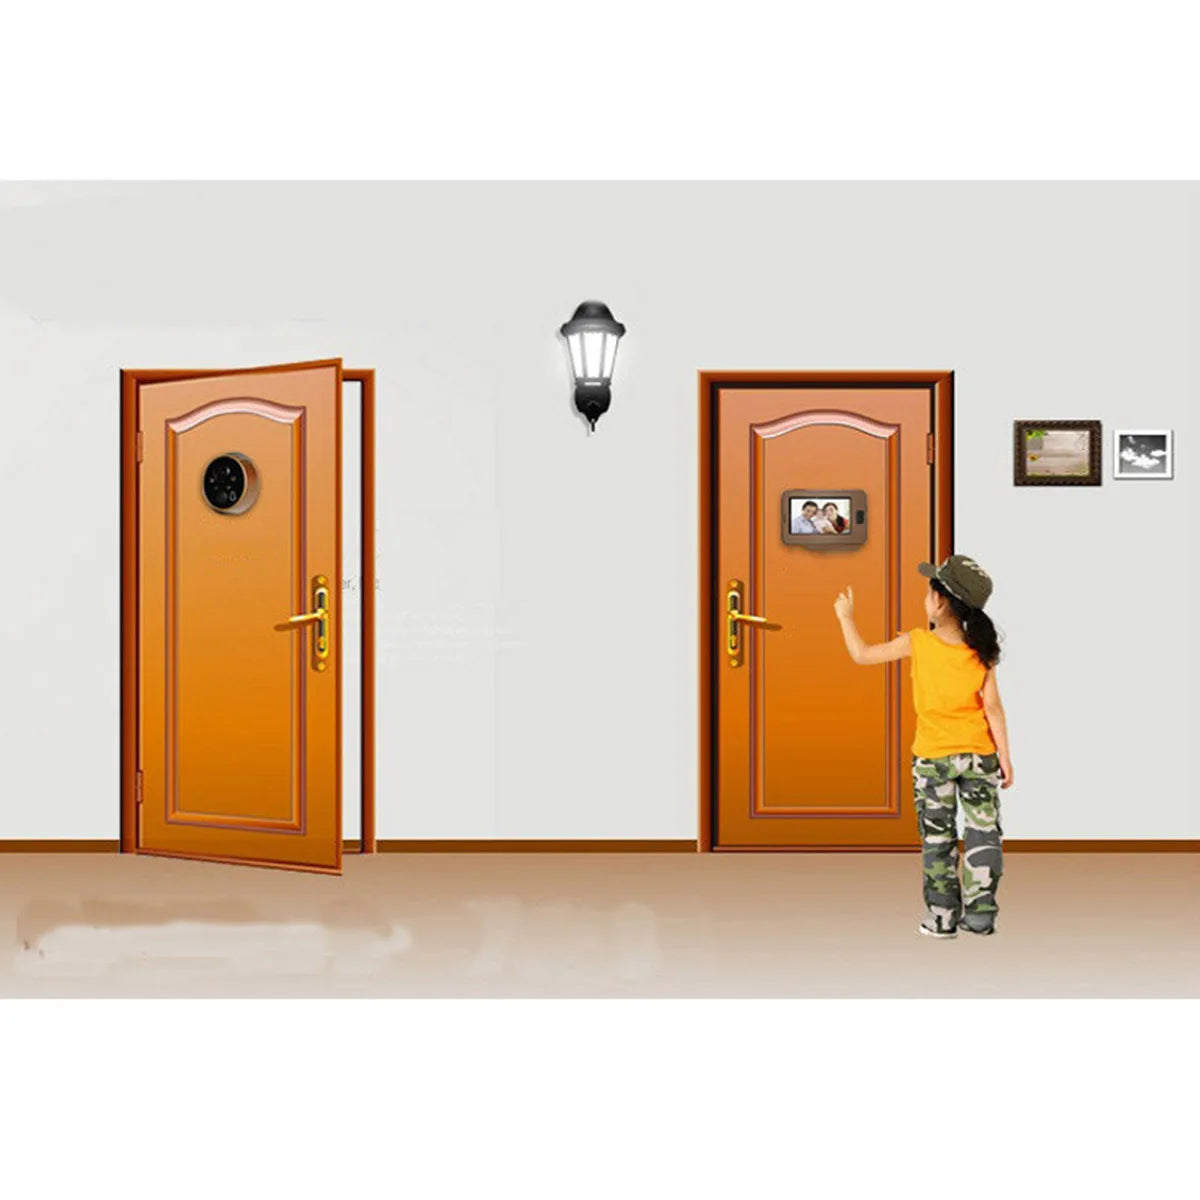 4.3 Inch Color Screen Peephole Door Camera With Electronic Doorbell LED Lights Video Door Viewer Video-eye Home Security